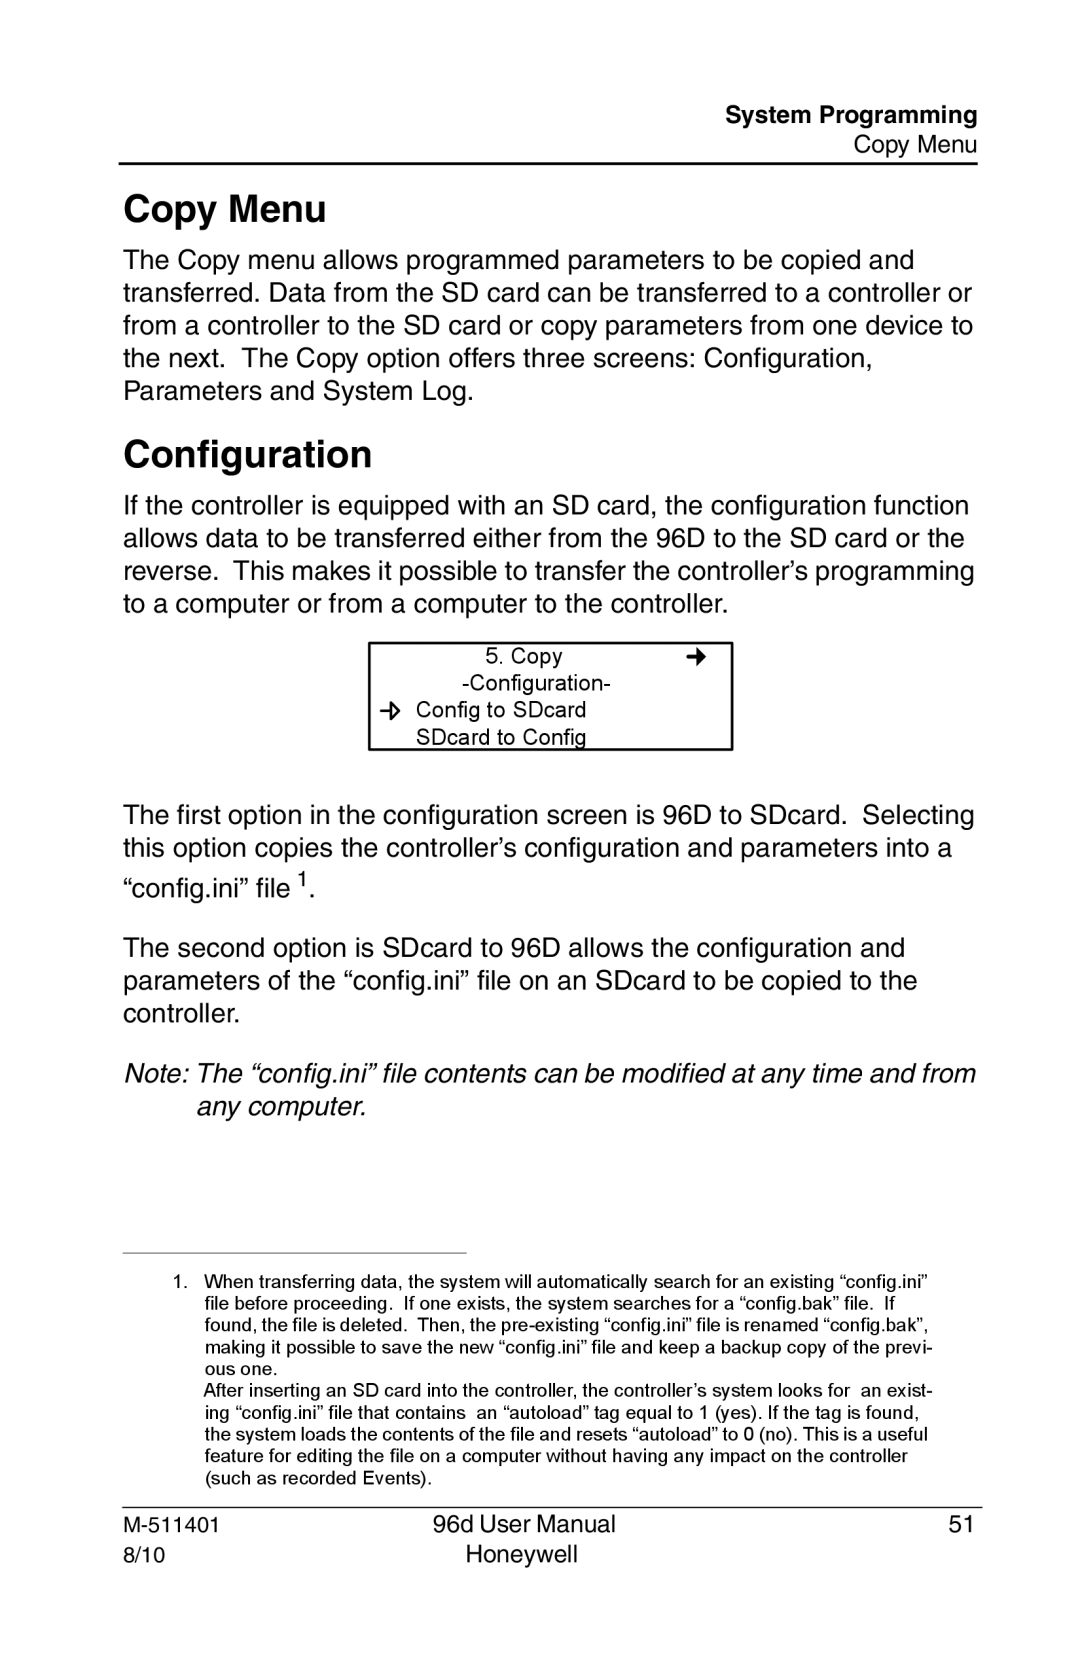 Honeywell 96D user manual Copy Menu, Configuration 